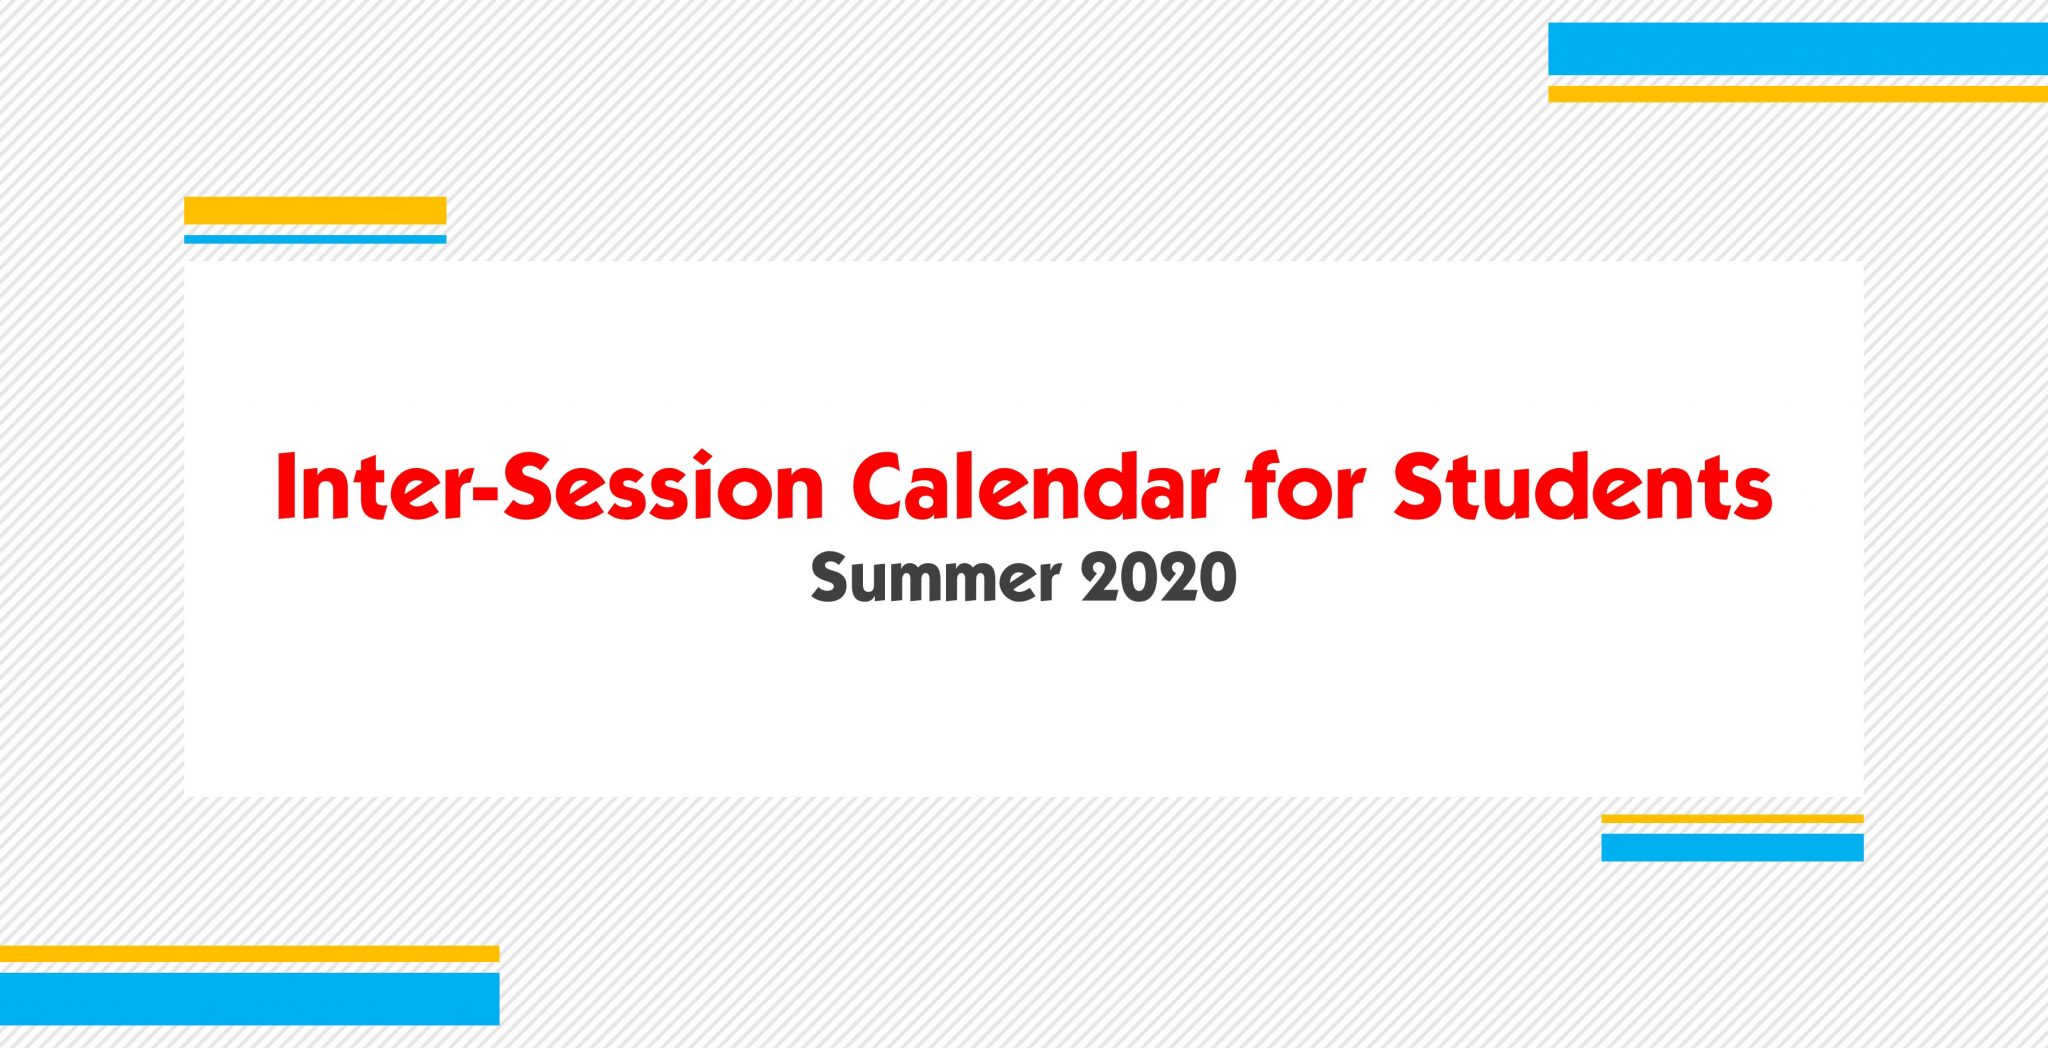 InterSession Calendar for Students Summer 2020 Generation's School